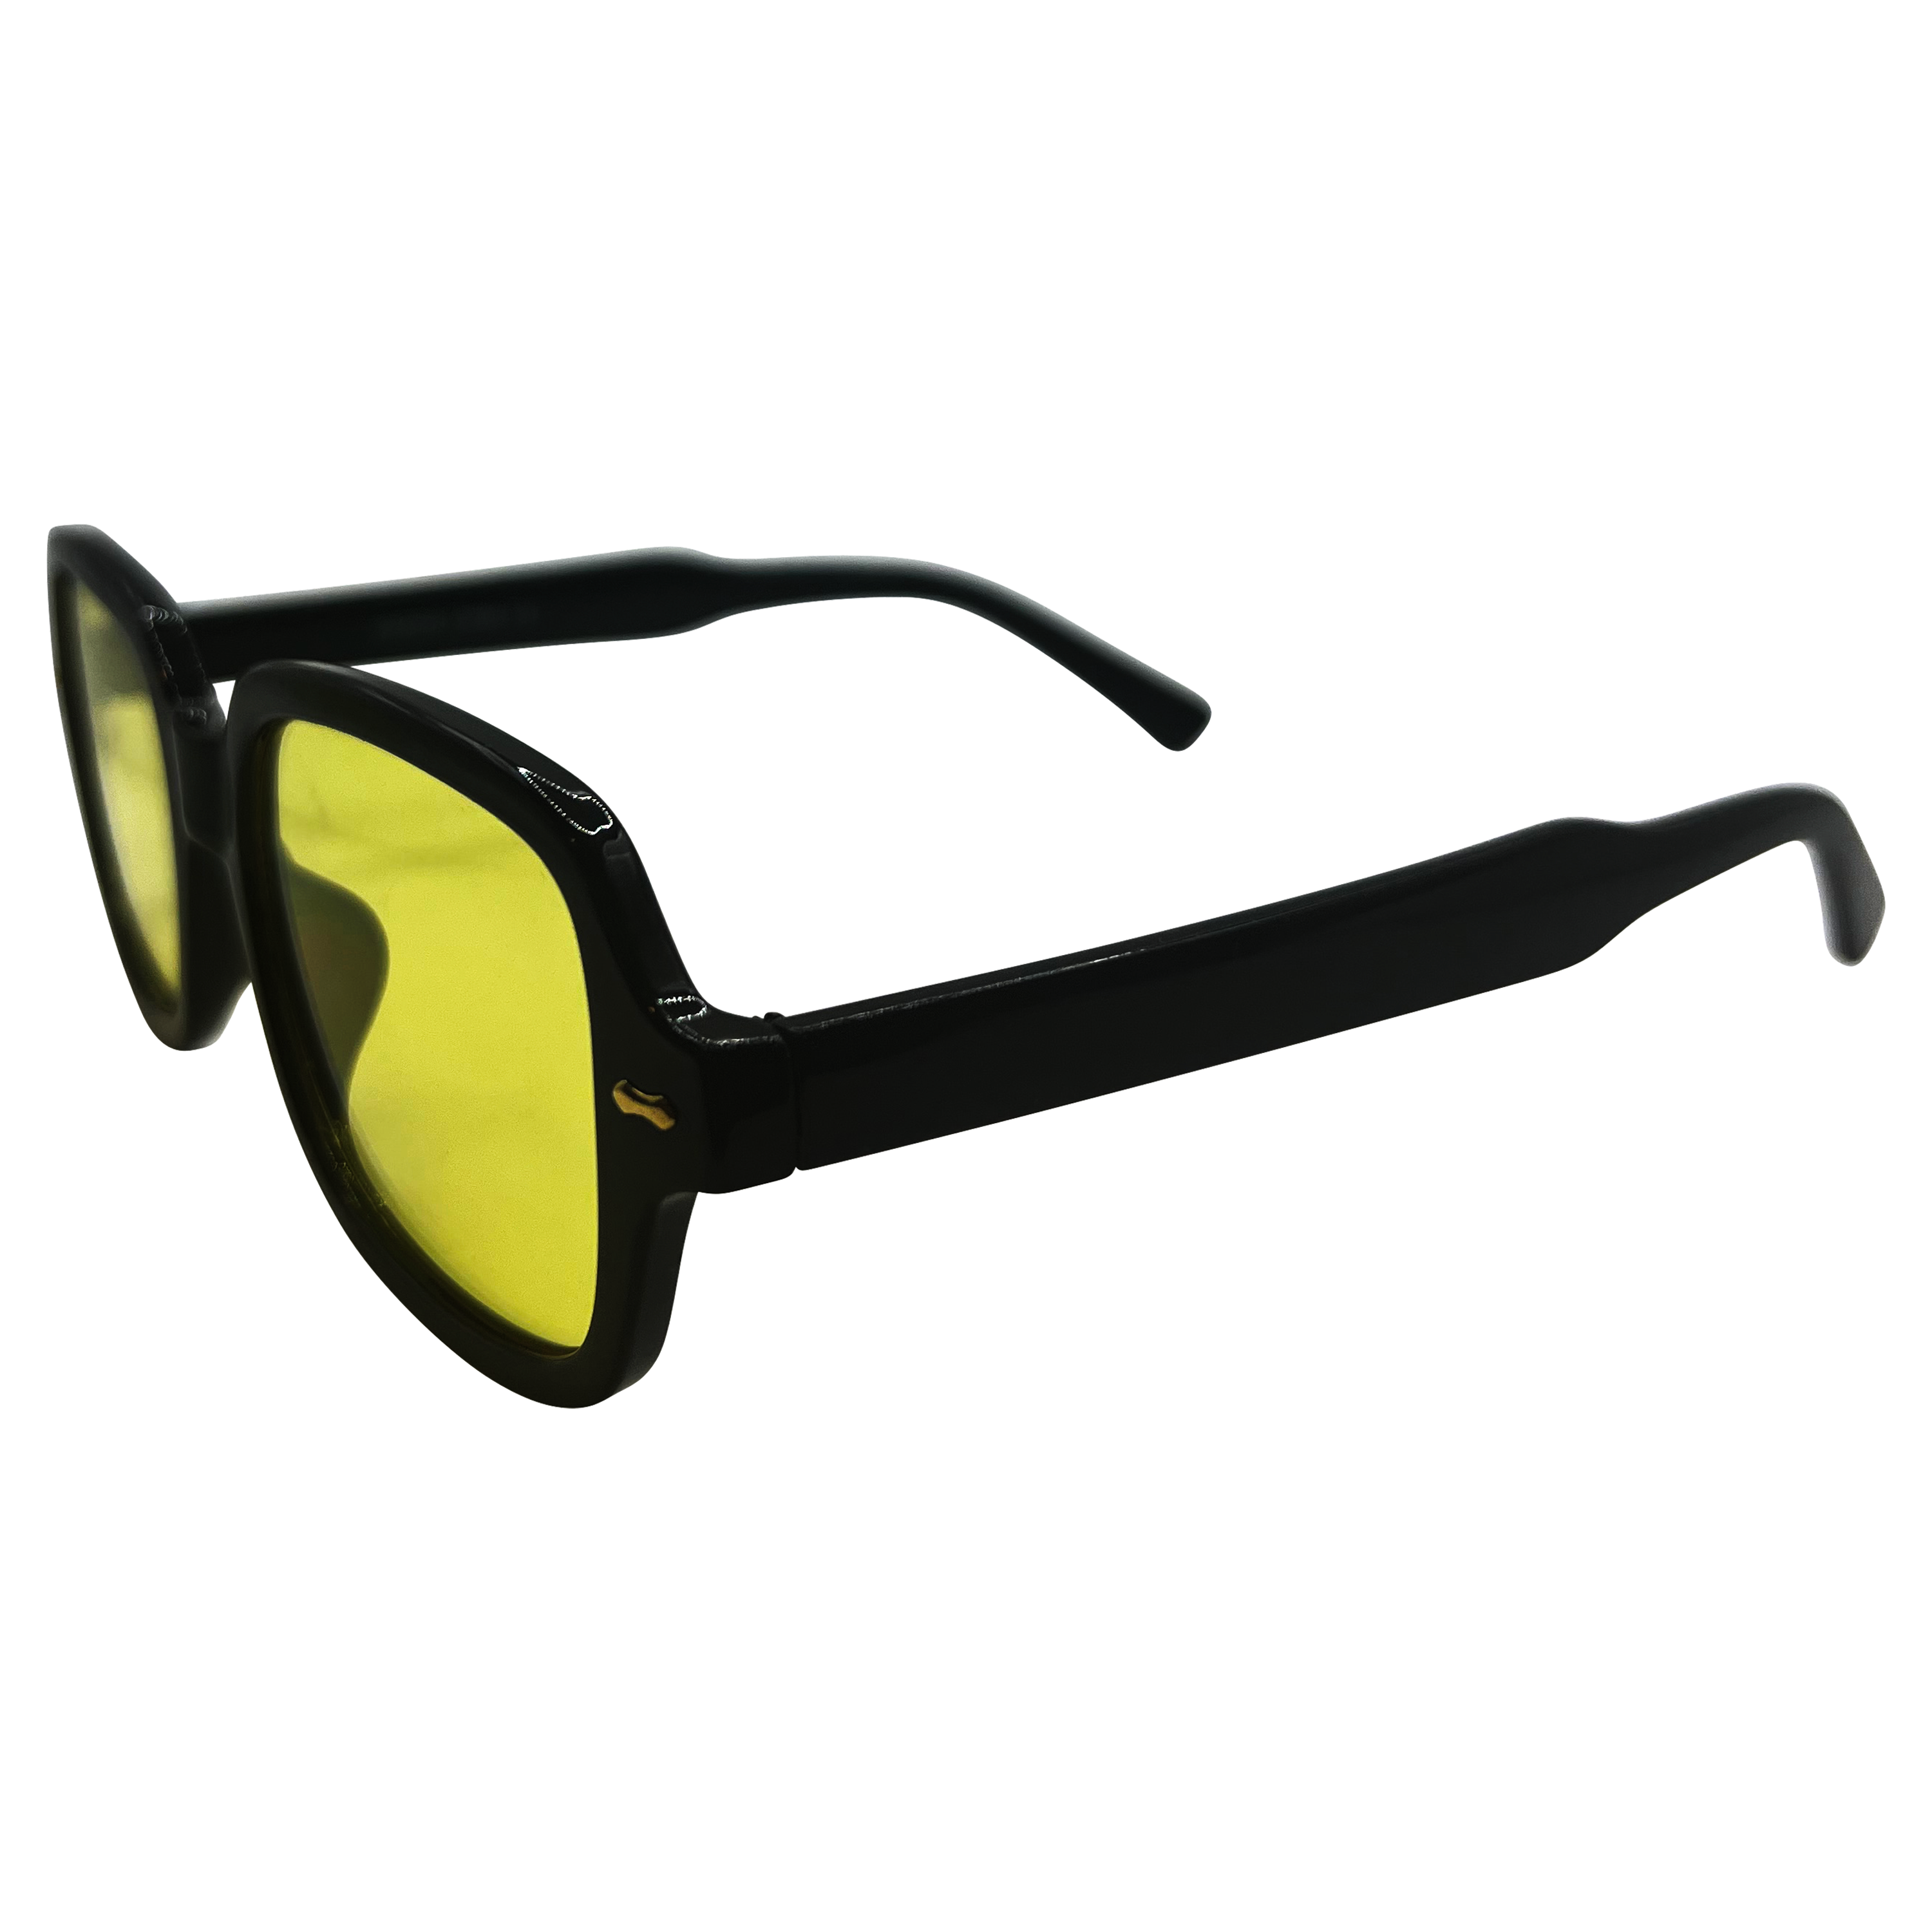 CANCELED Yellow Sunglasses